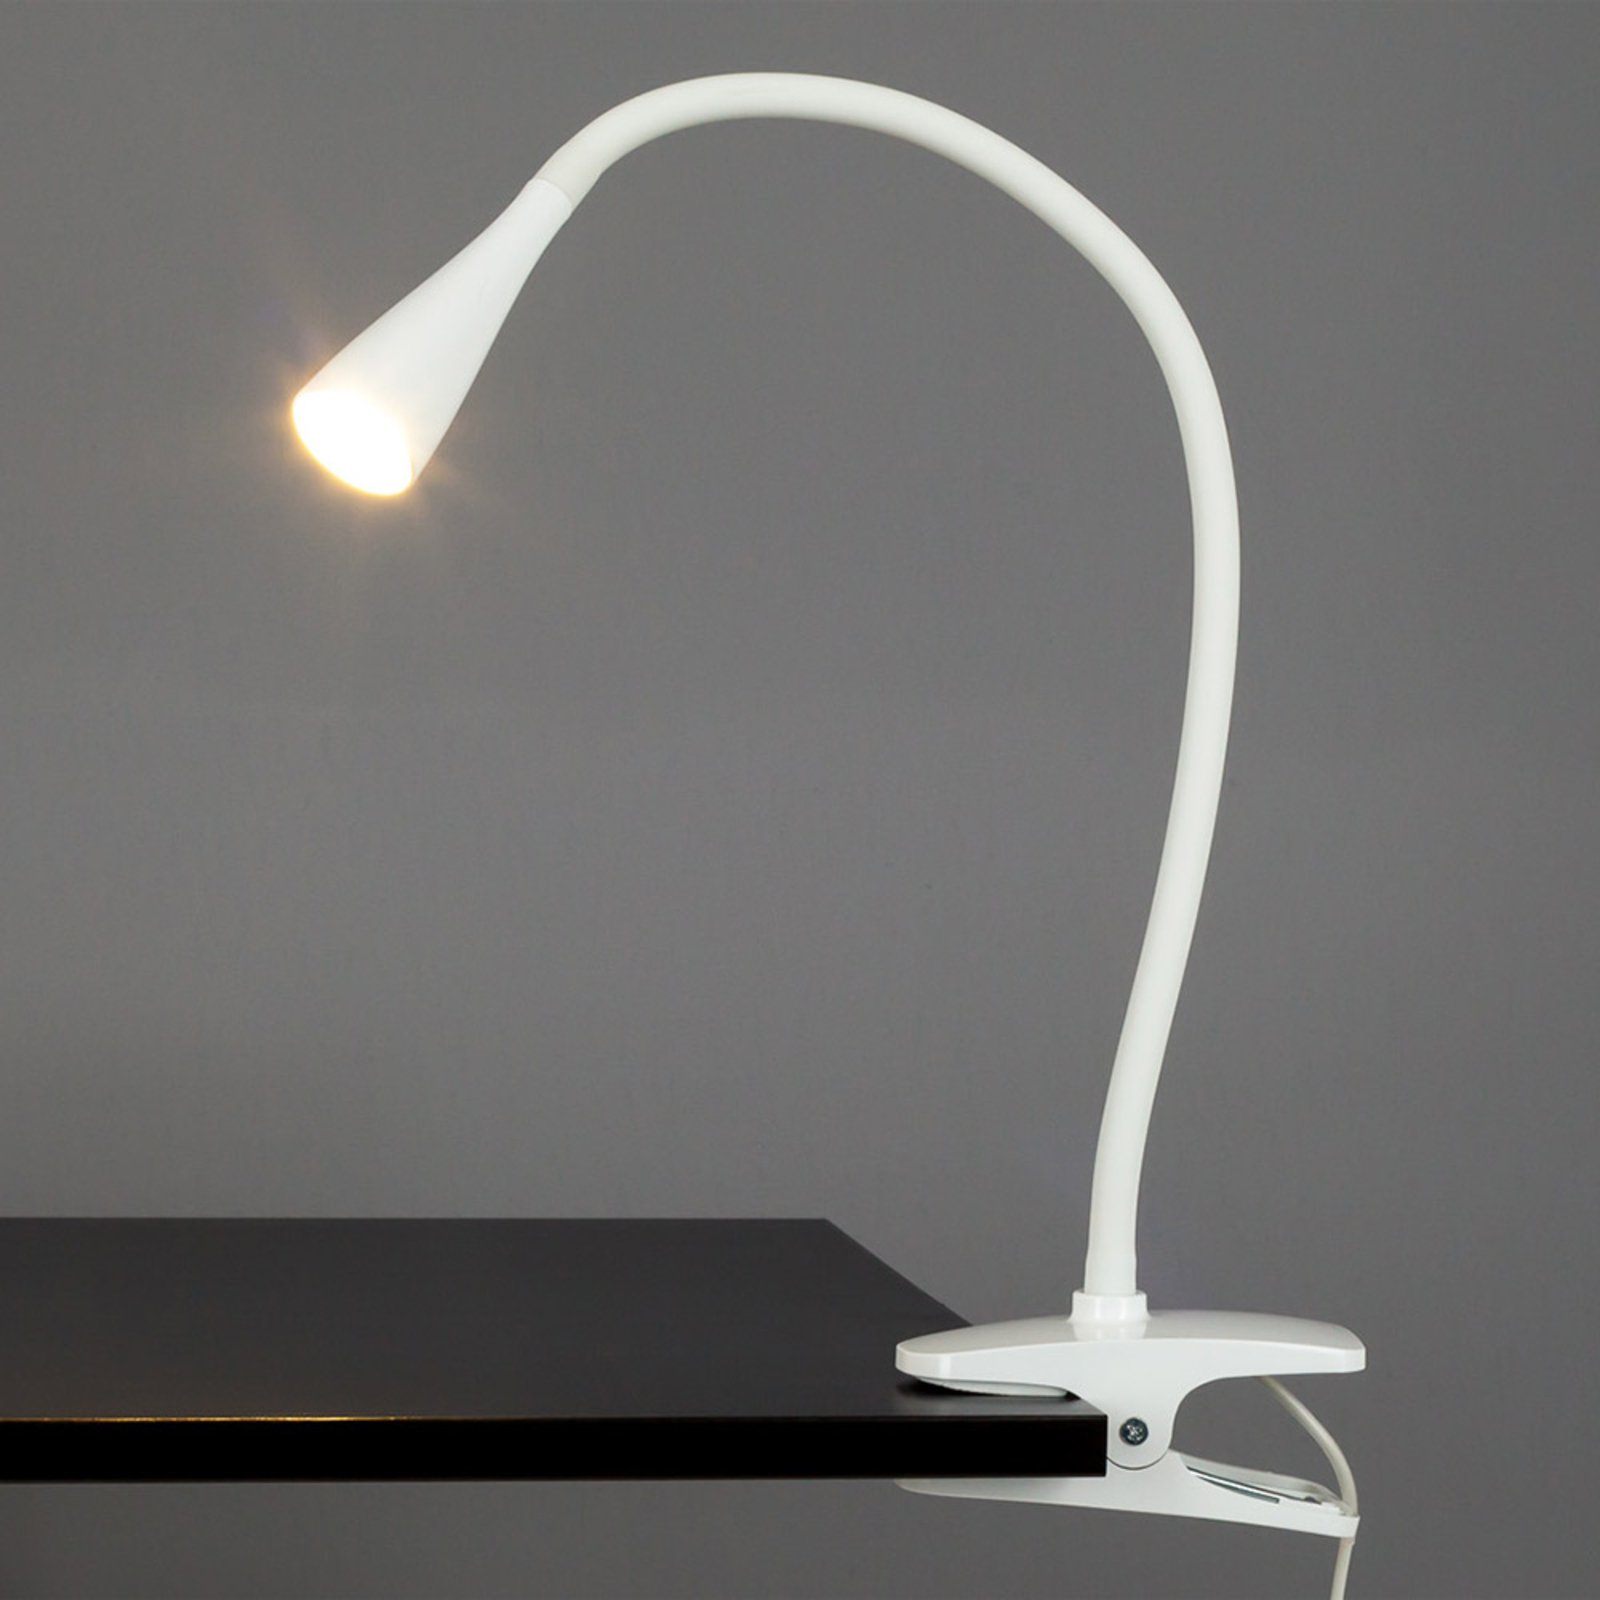 Wąska lampa zaciskowa LED Baris w bieli